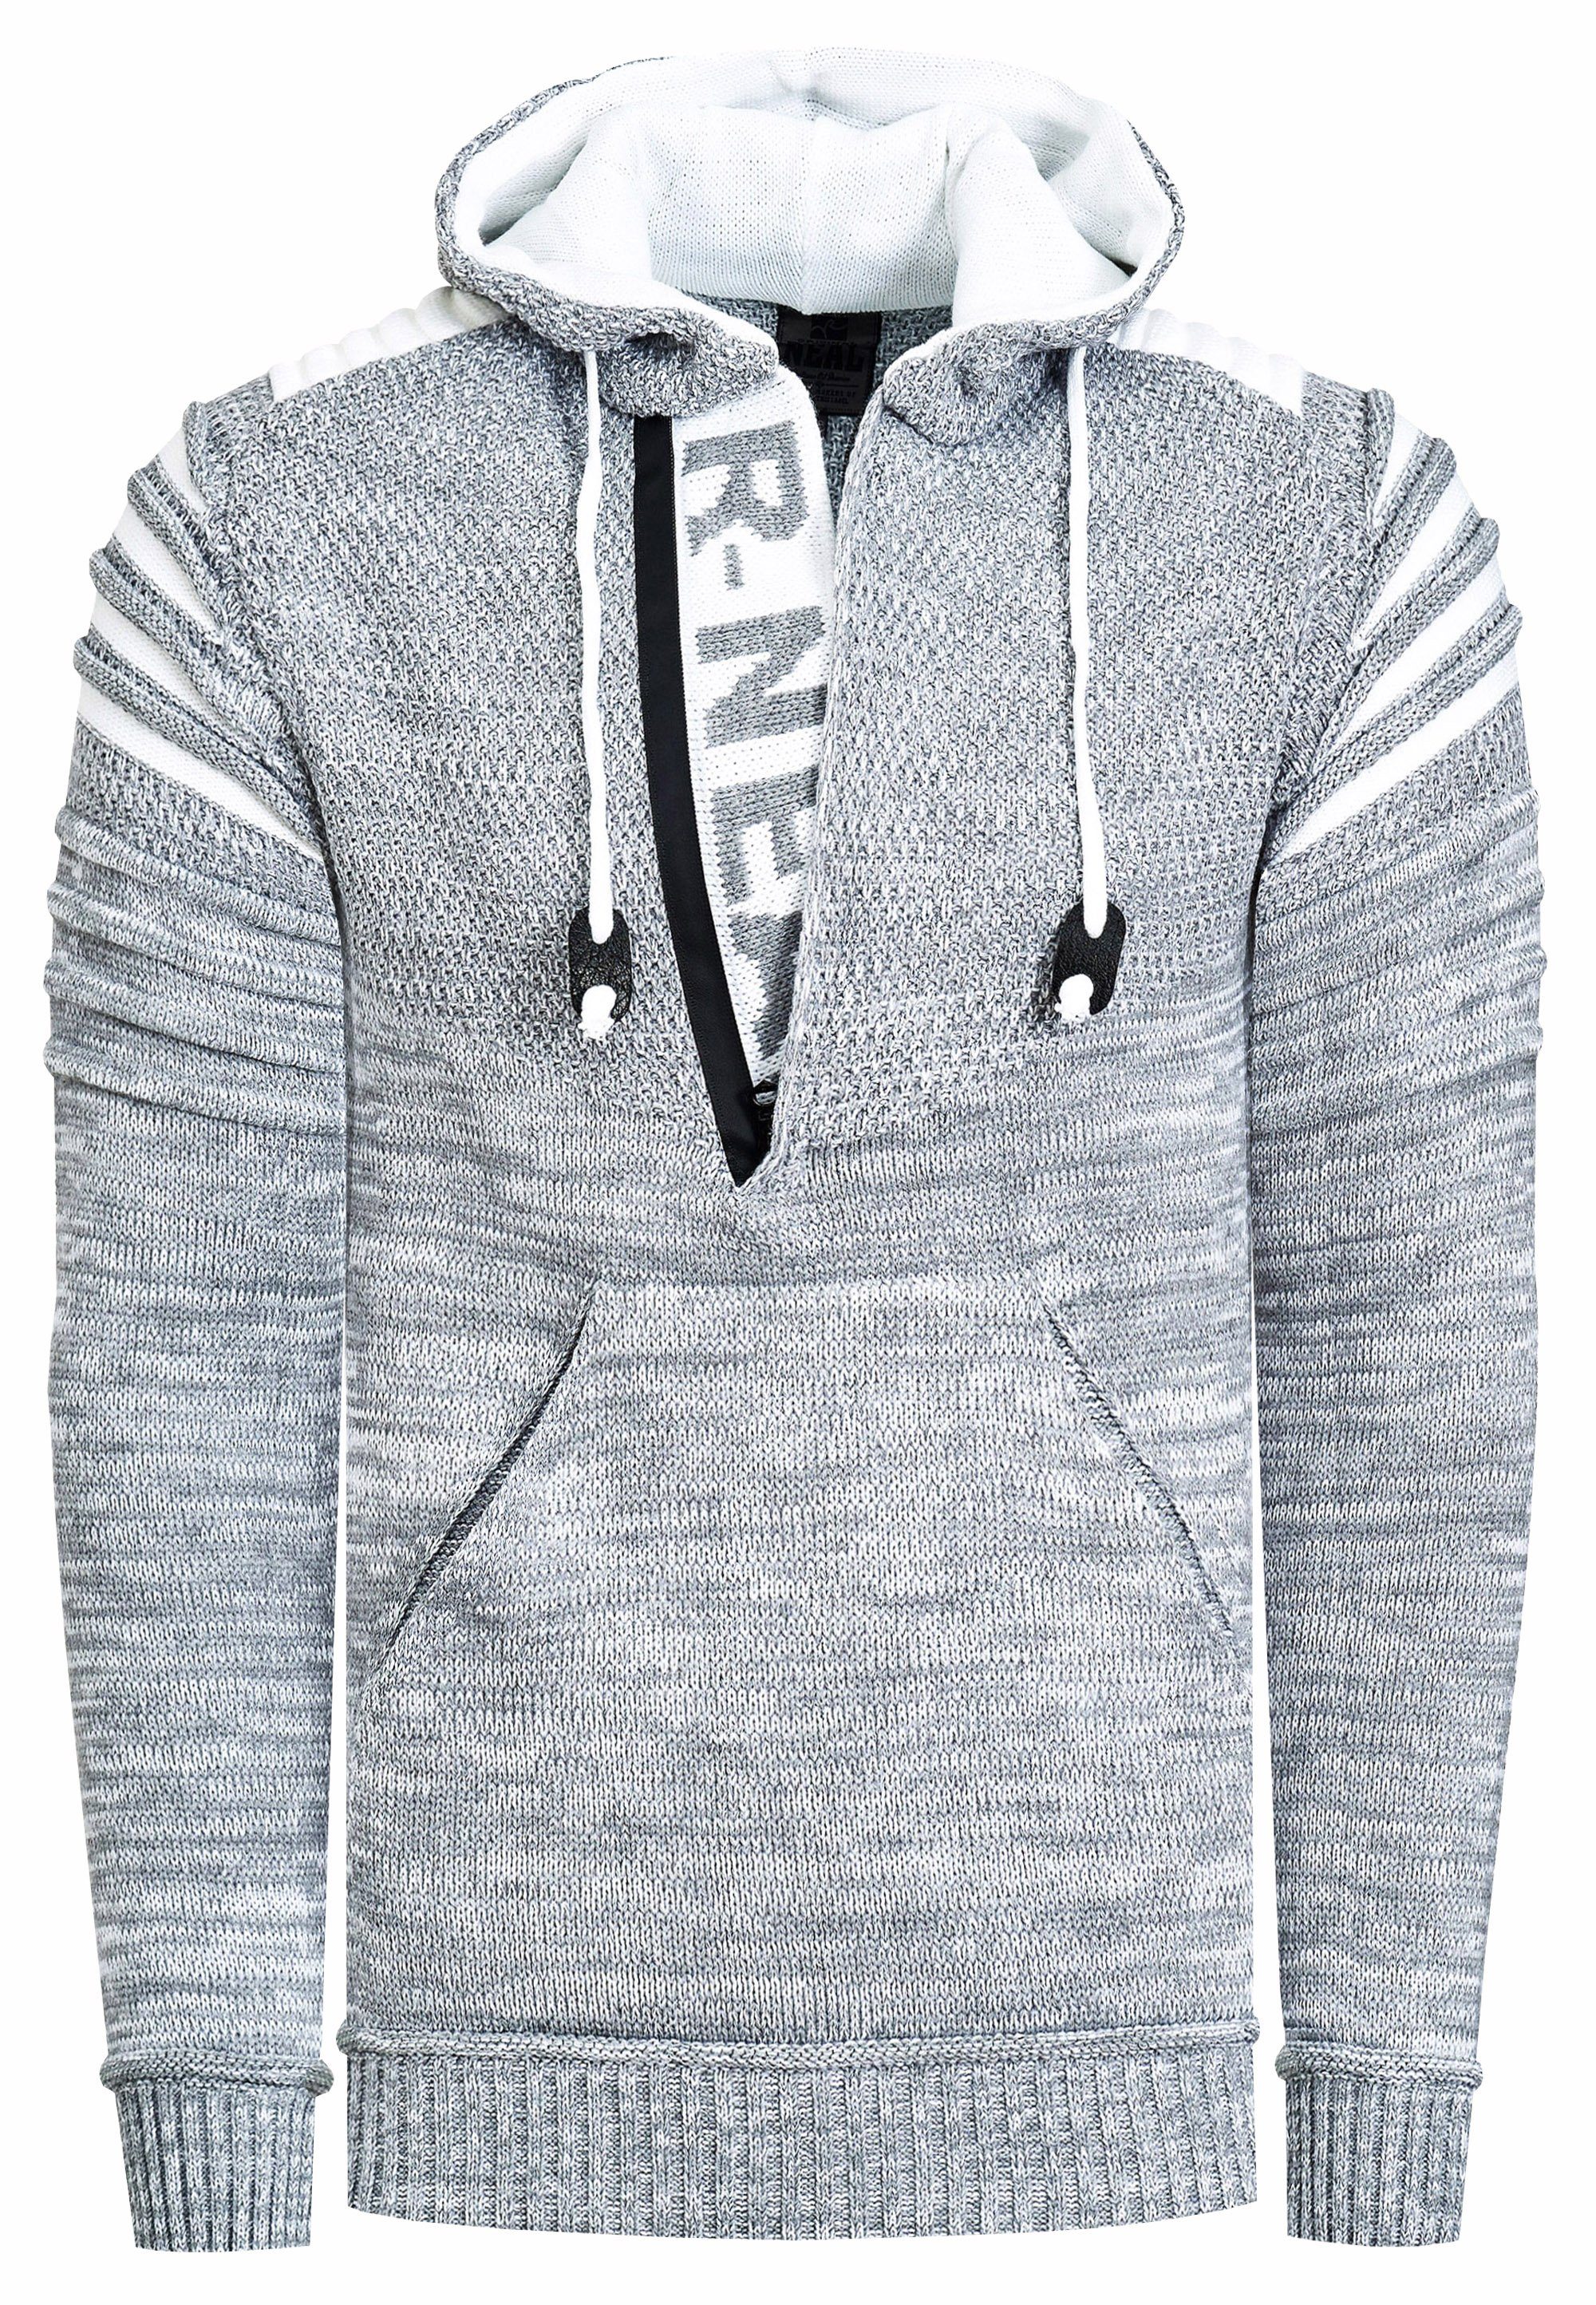 Rusty Neal Kapuzensweatshirt in modernem grau Strickdesign